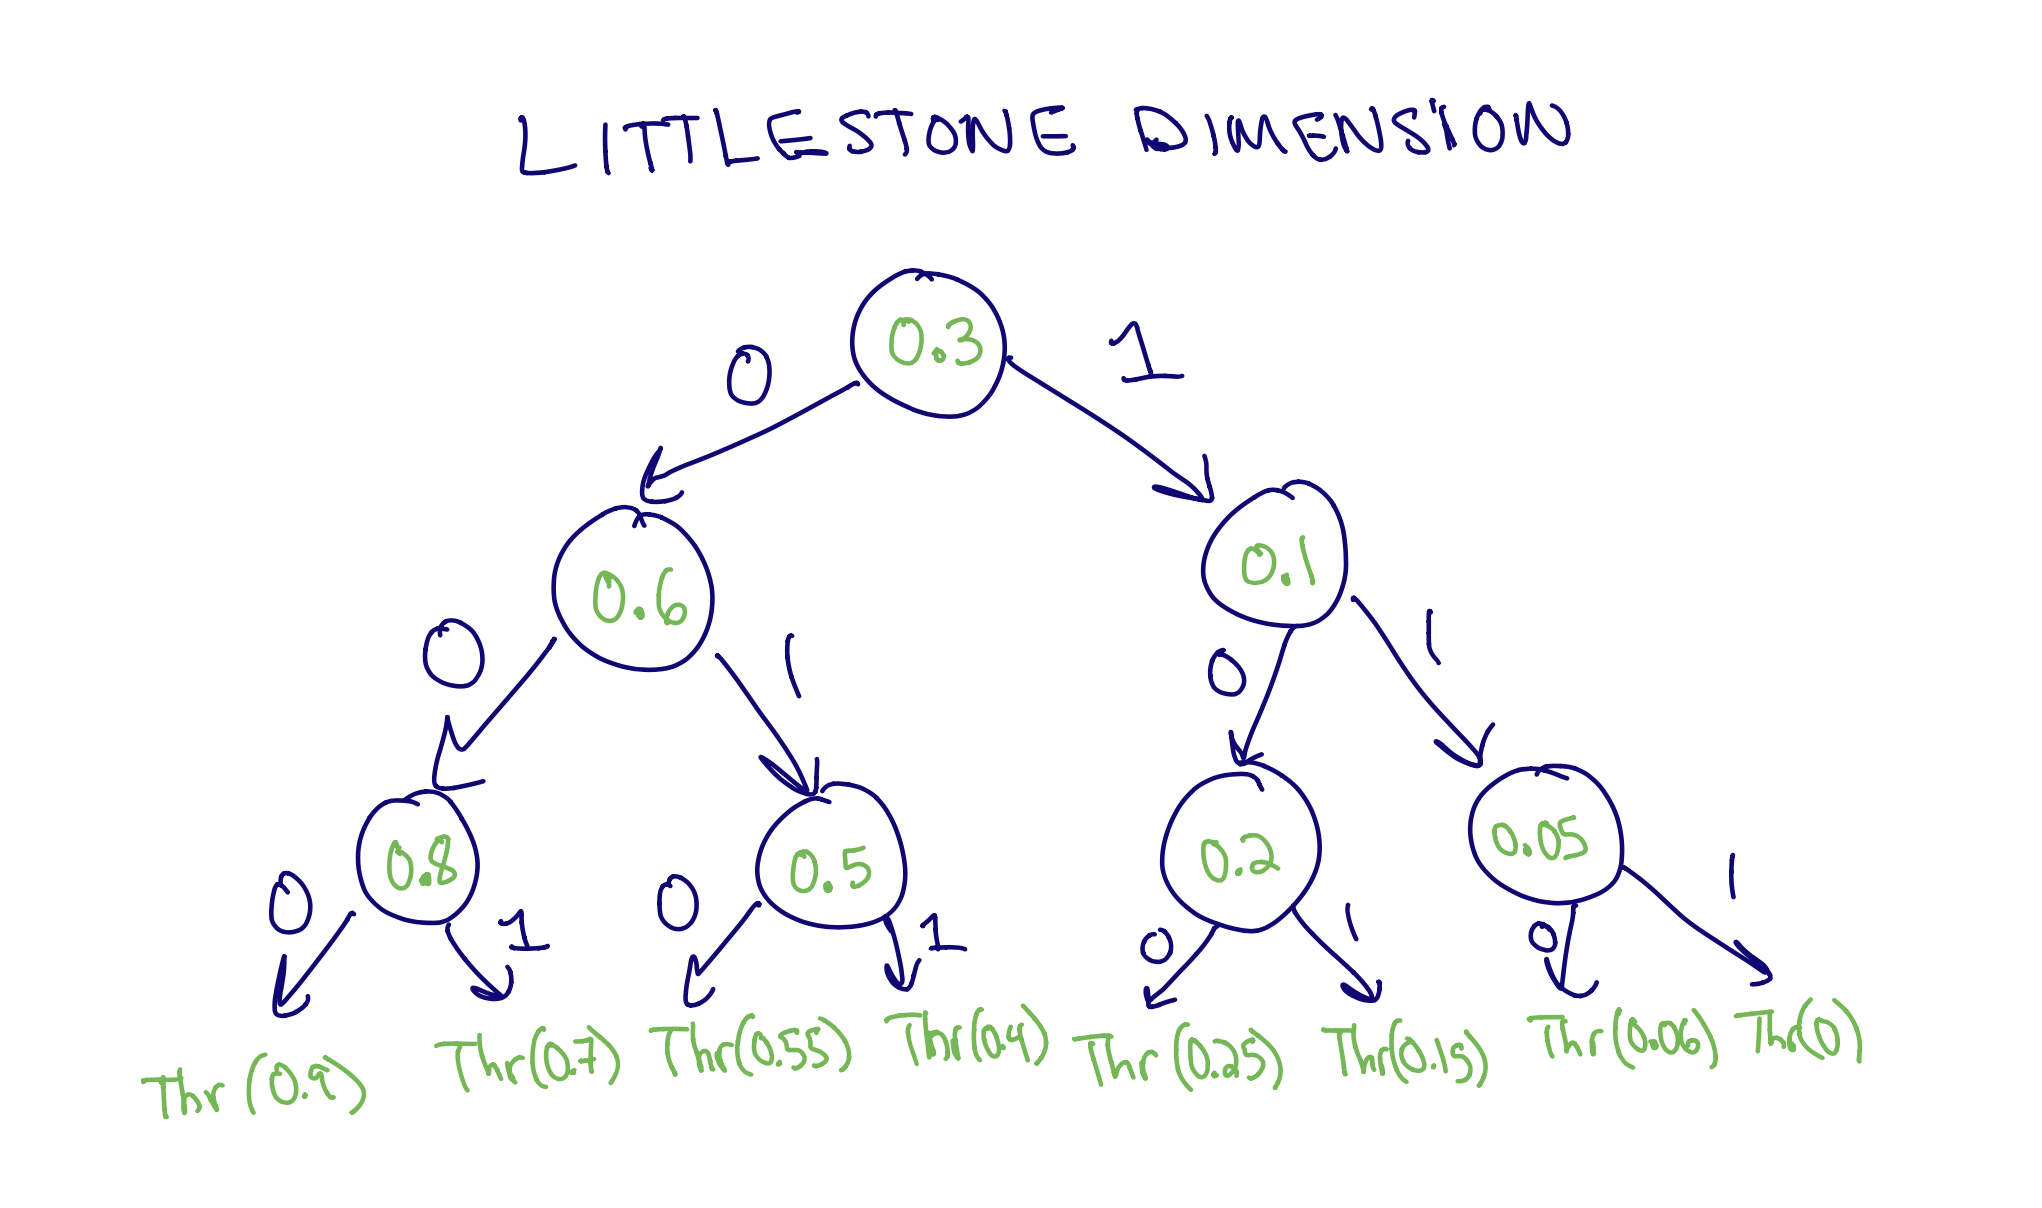 Figure 1: Littlestone Dimension